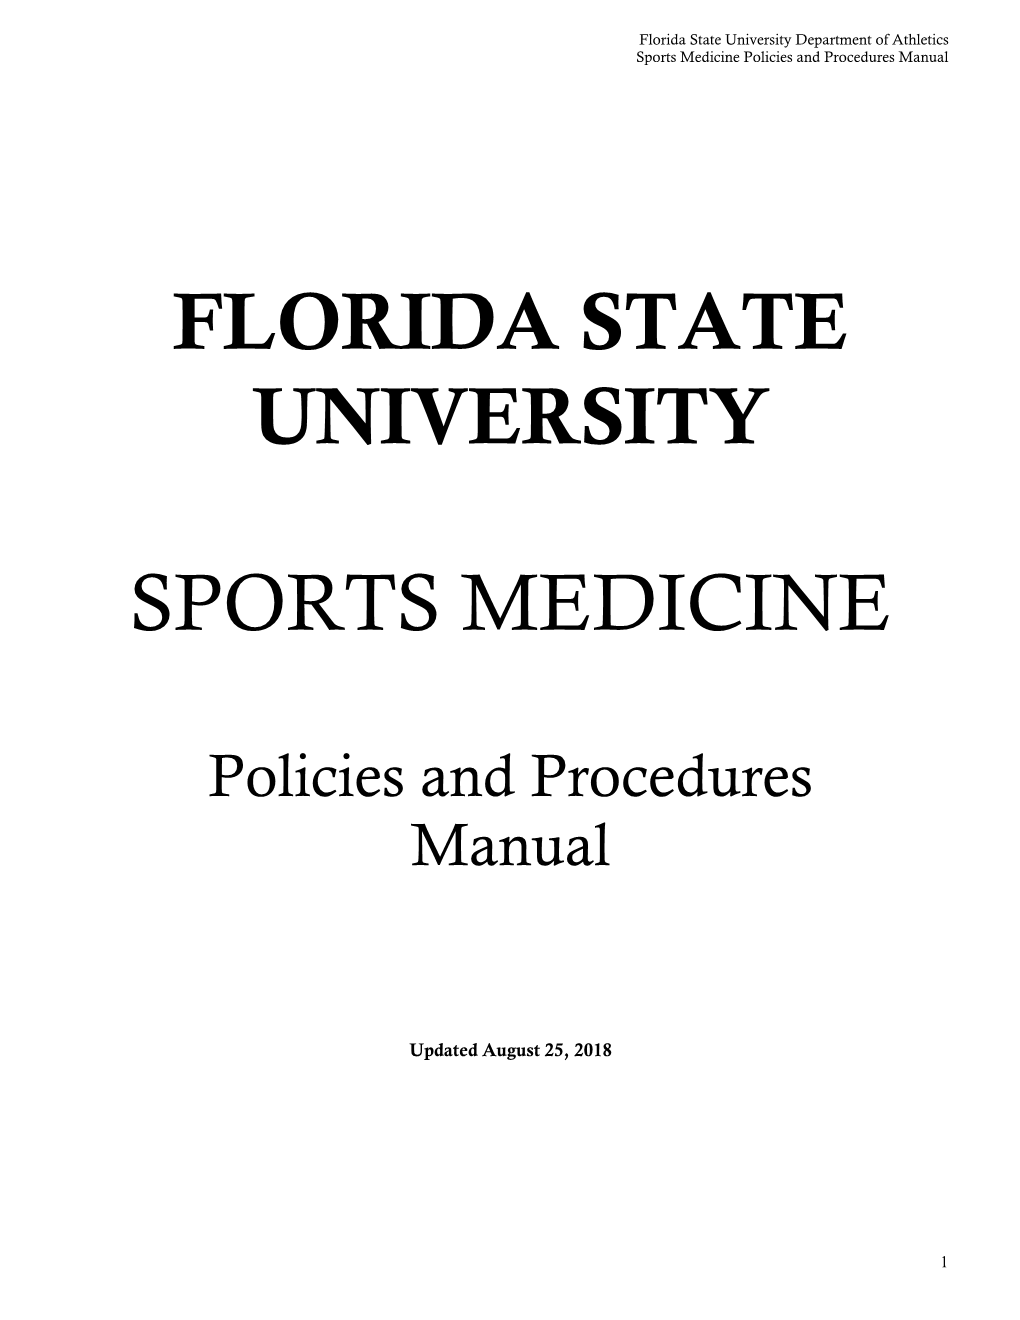 FSU Policies and Procedures Manual 2018-2019